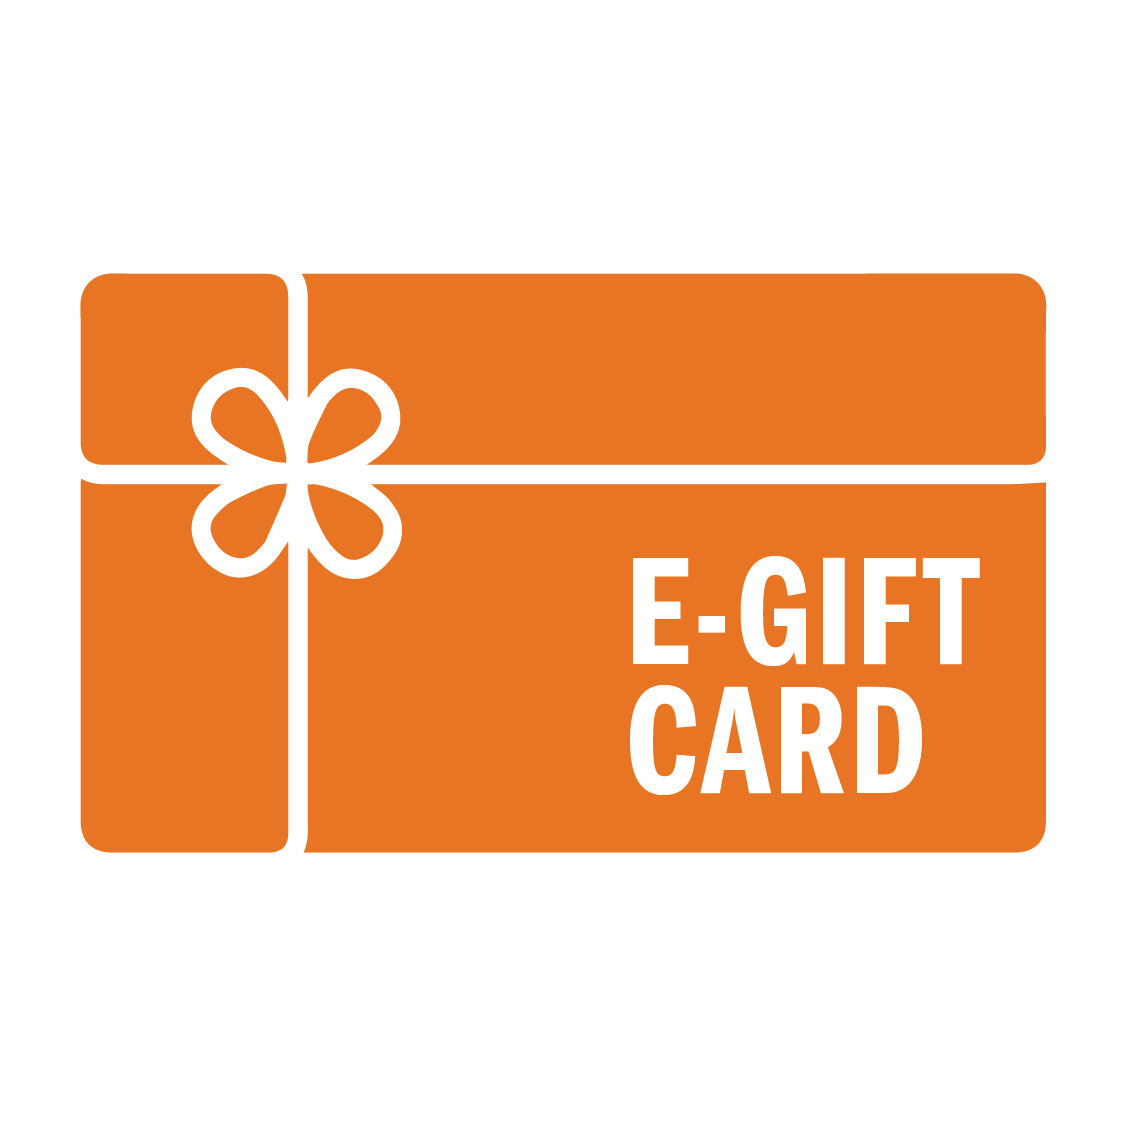 Amazon.com Gift Card Scams